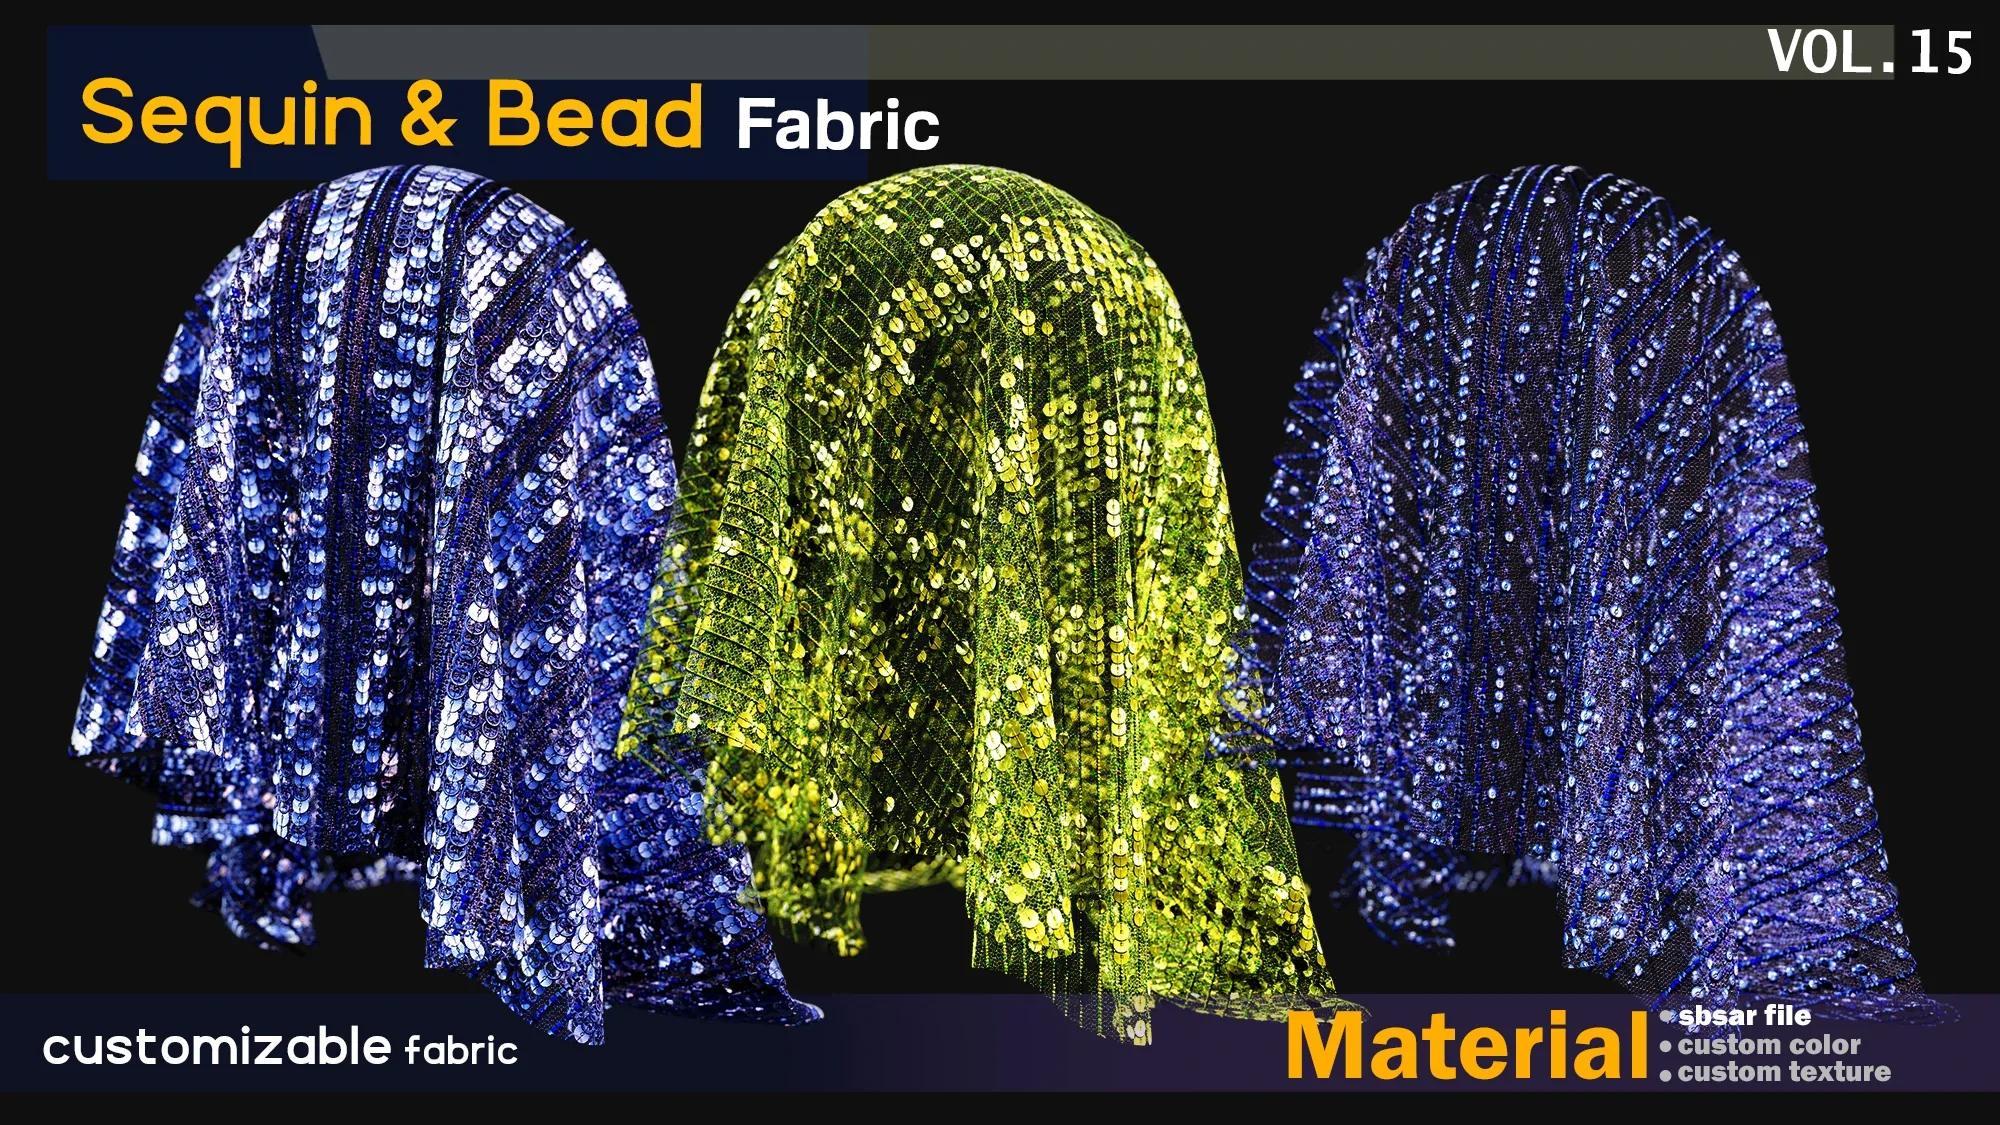 Sequin & Beaded fabric Material -SBSAR -custom color -custom fabric -VOL 15